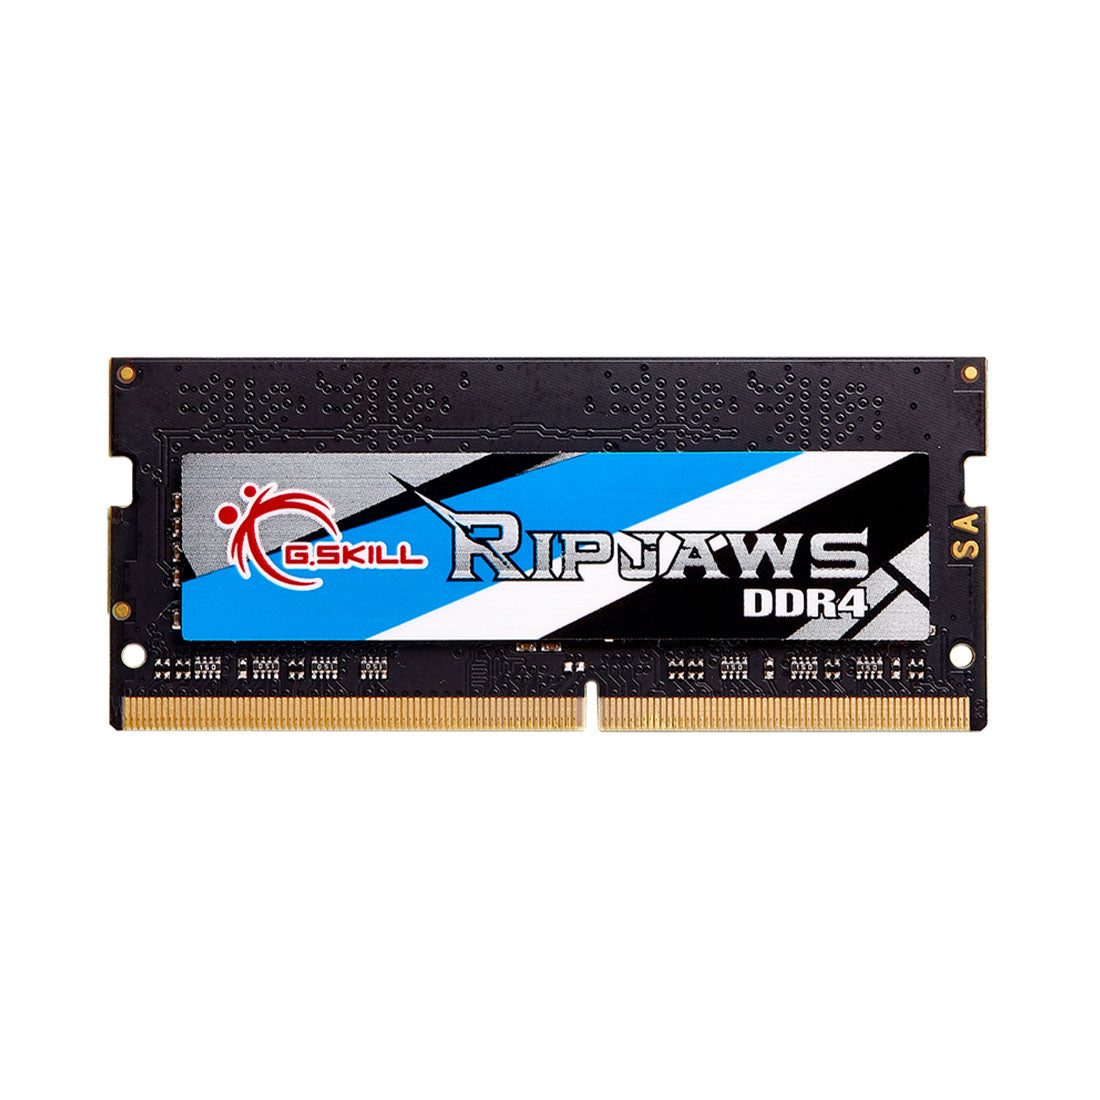 G.SKILL Ripjaws RAM DDR4 2666MHz लैपटॉप मेमोरी